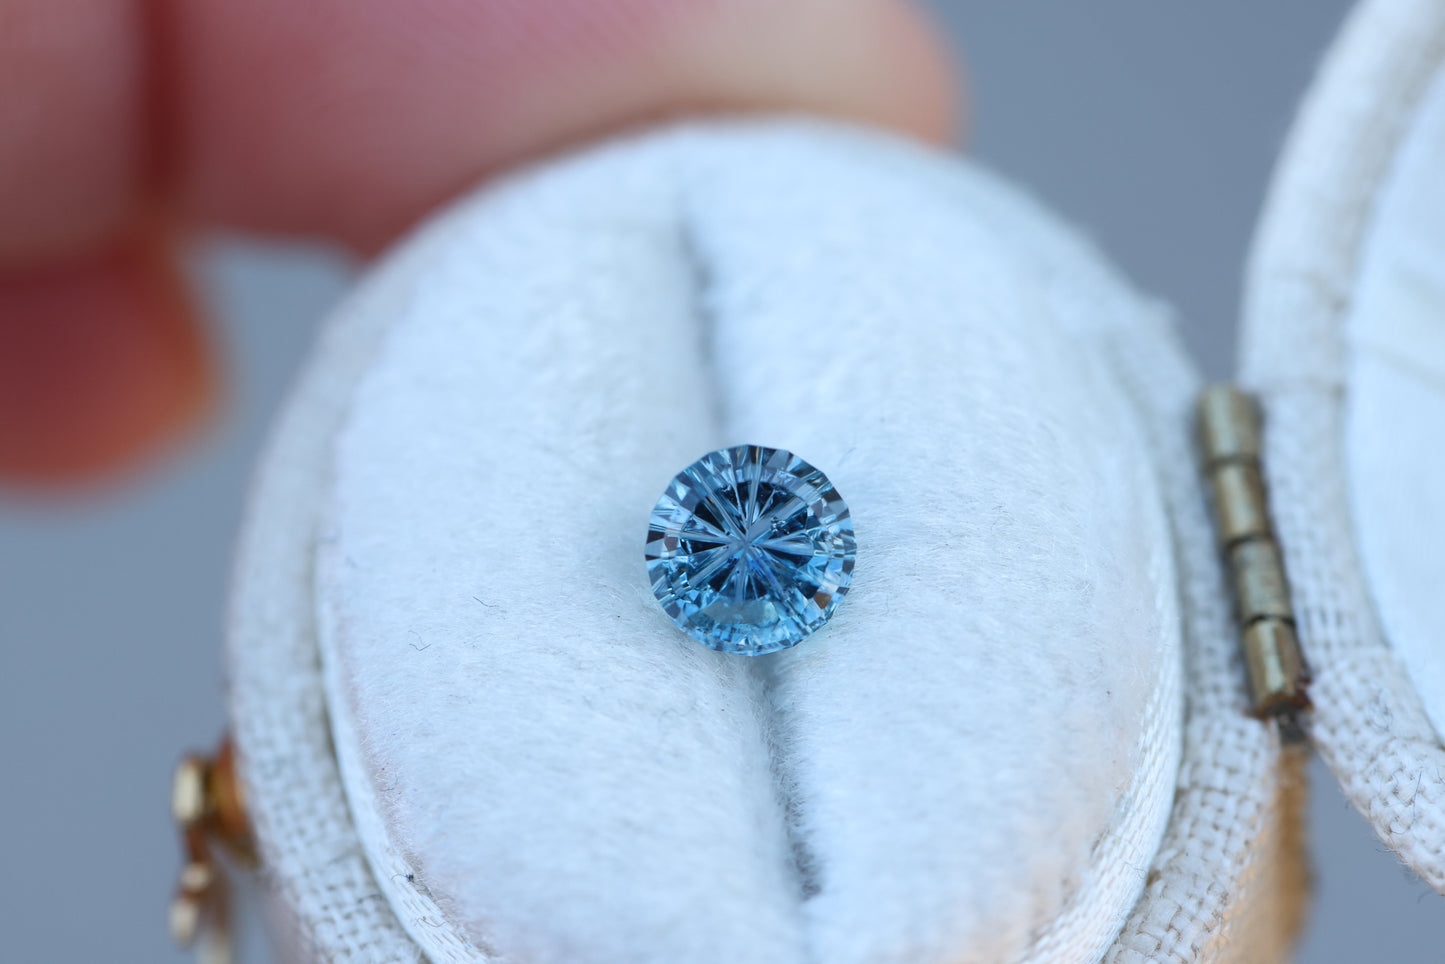 1.08ct round blue sapphire - Starbrite cut by John Dyer